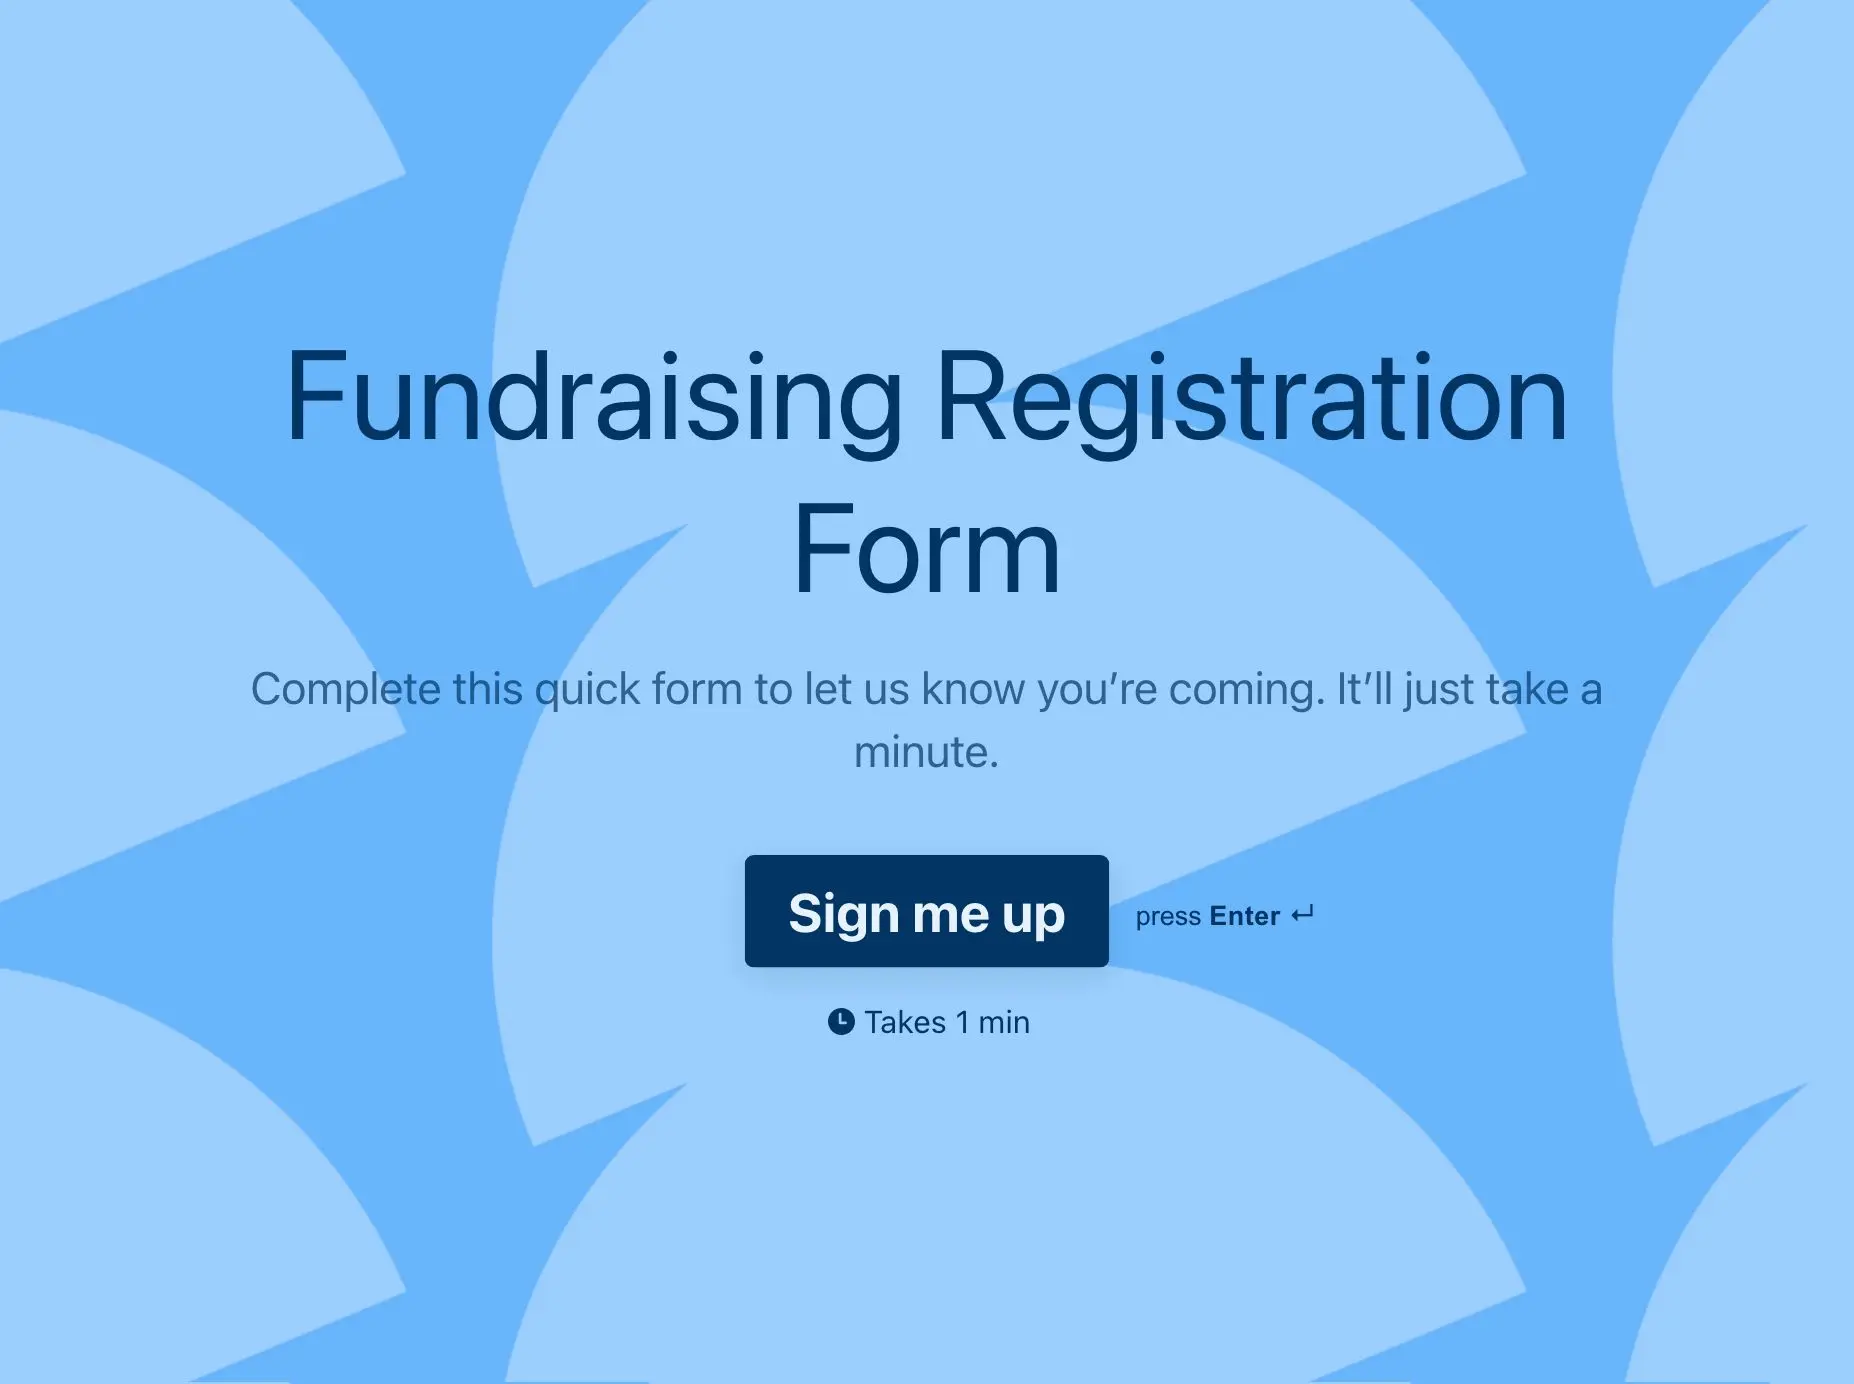 Fundraising Registration Form Template Hero